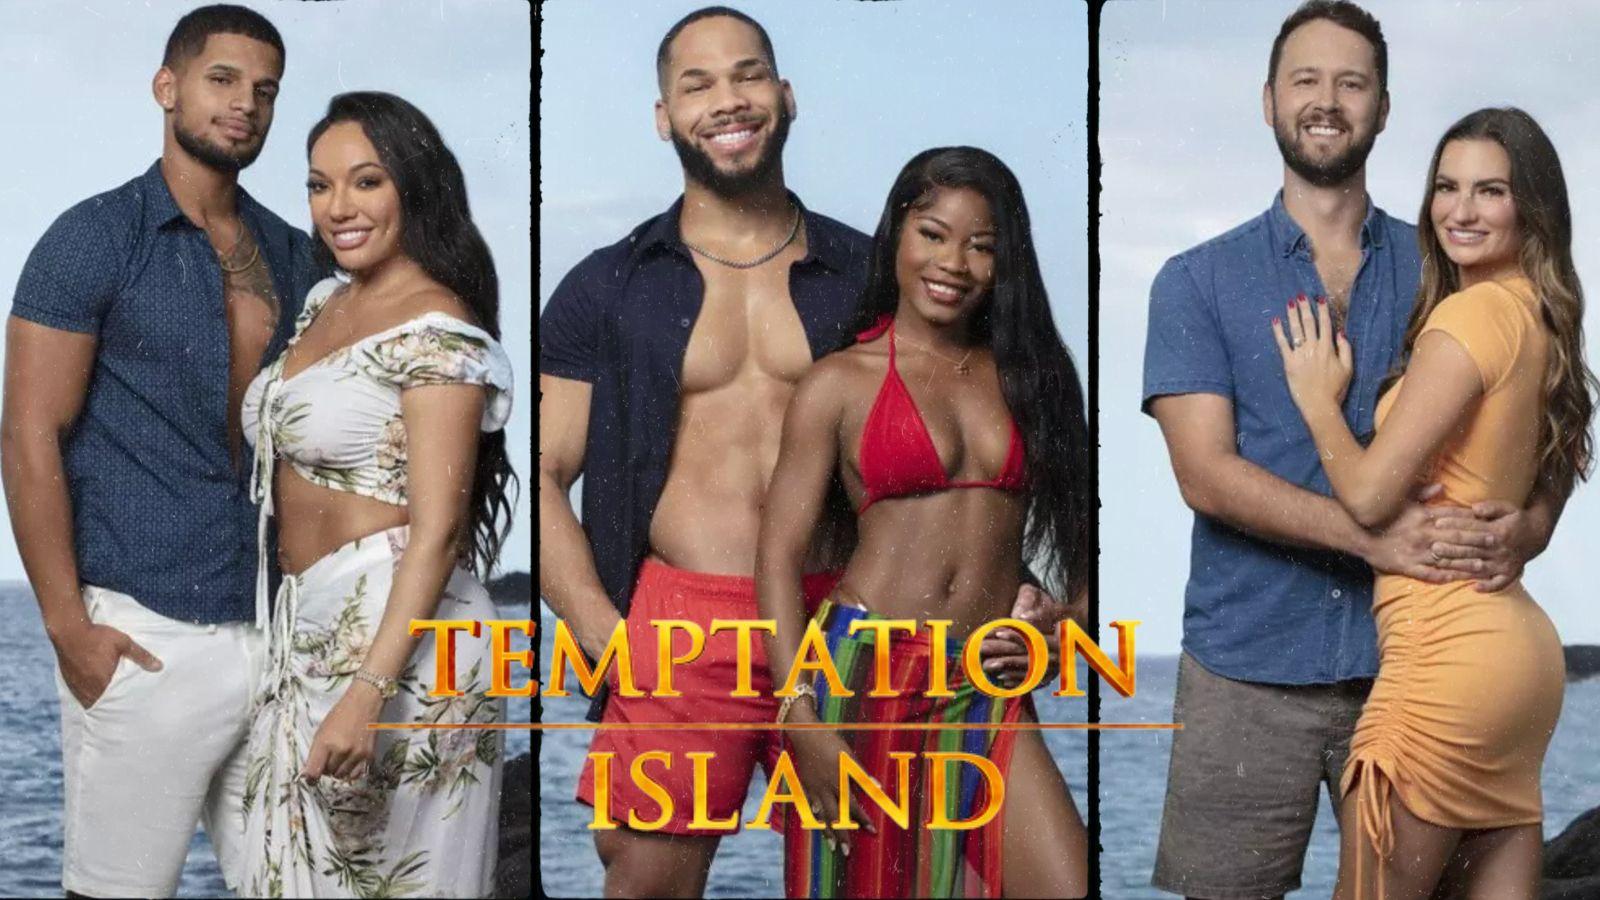 Is Temptation Island on Netflix?